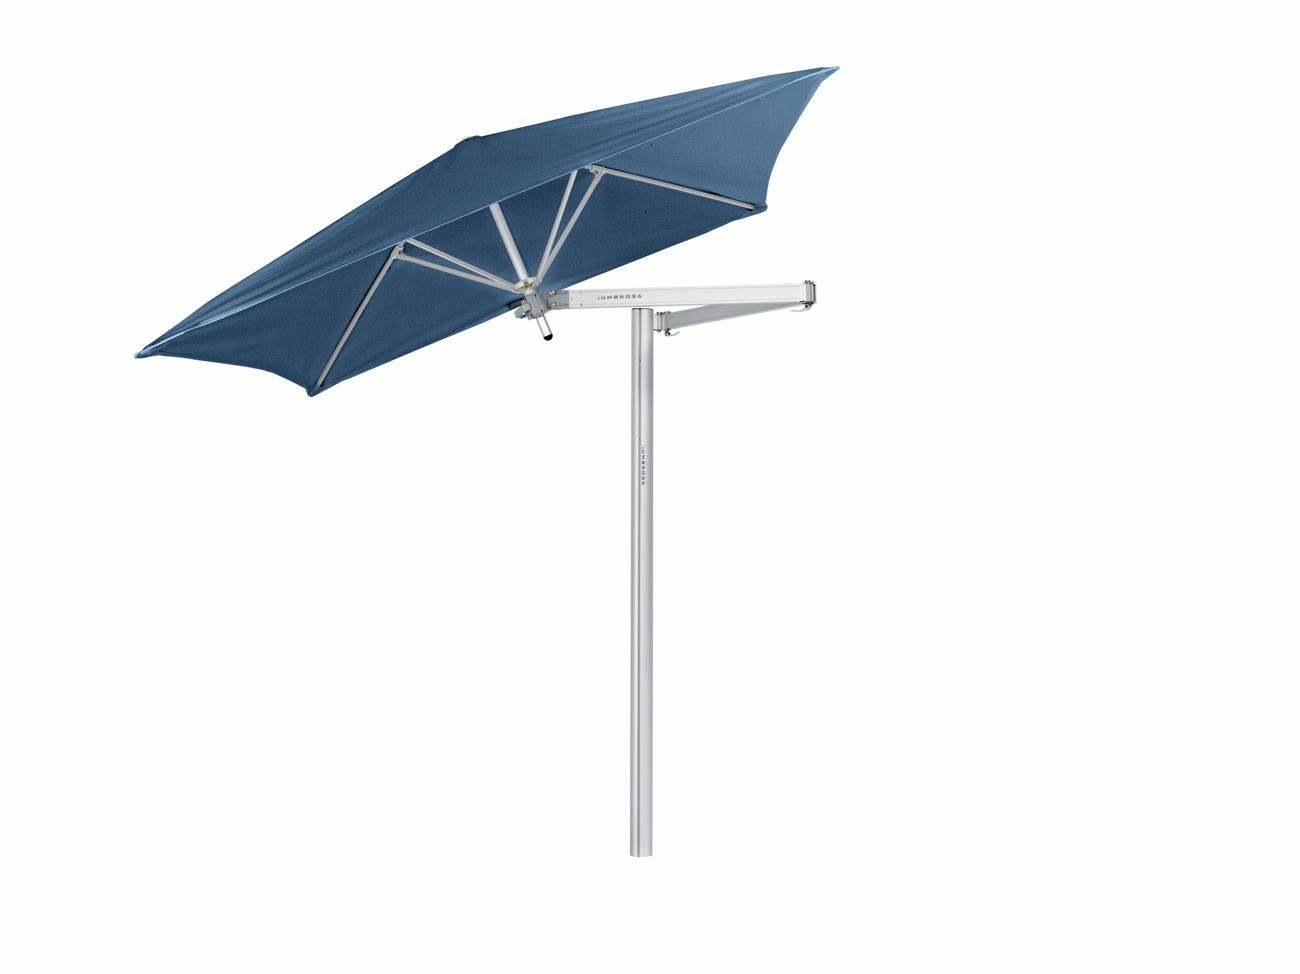 Paraflex cantilever umbrella square 1,9 m with Blue Storm fabric and a Classic arm